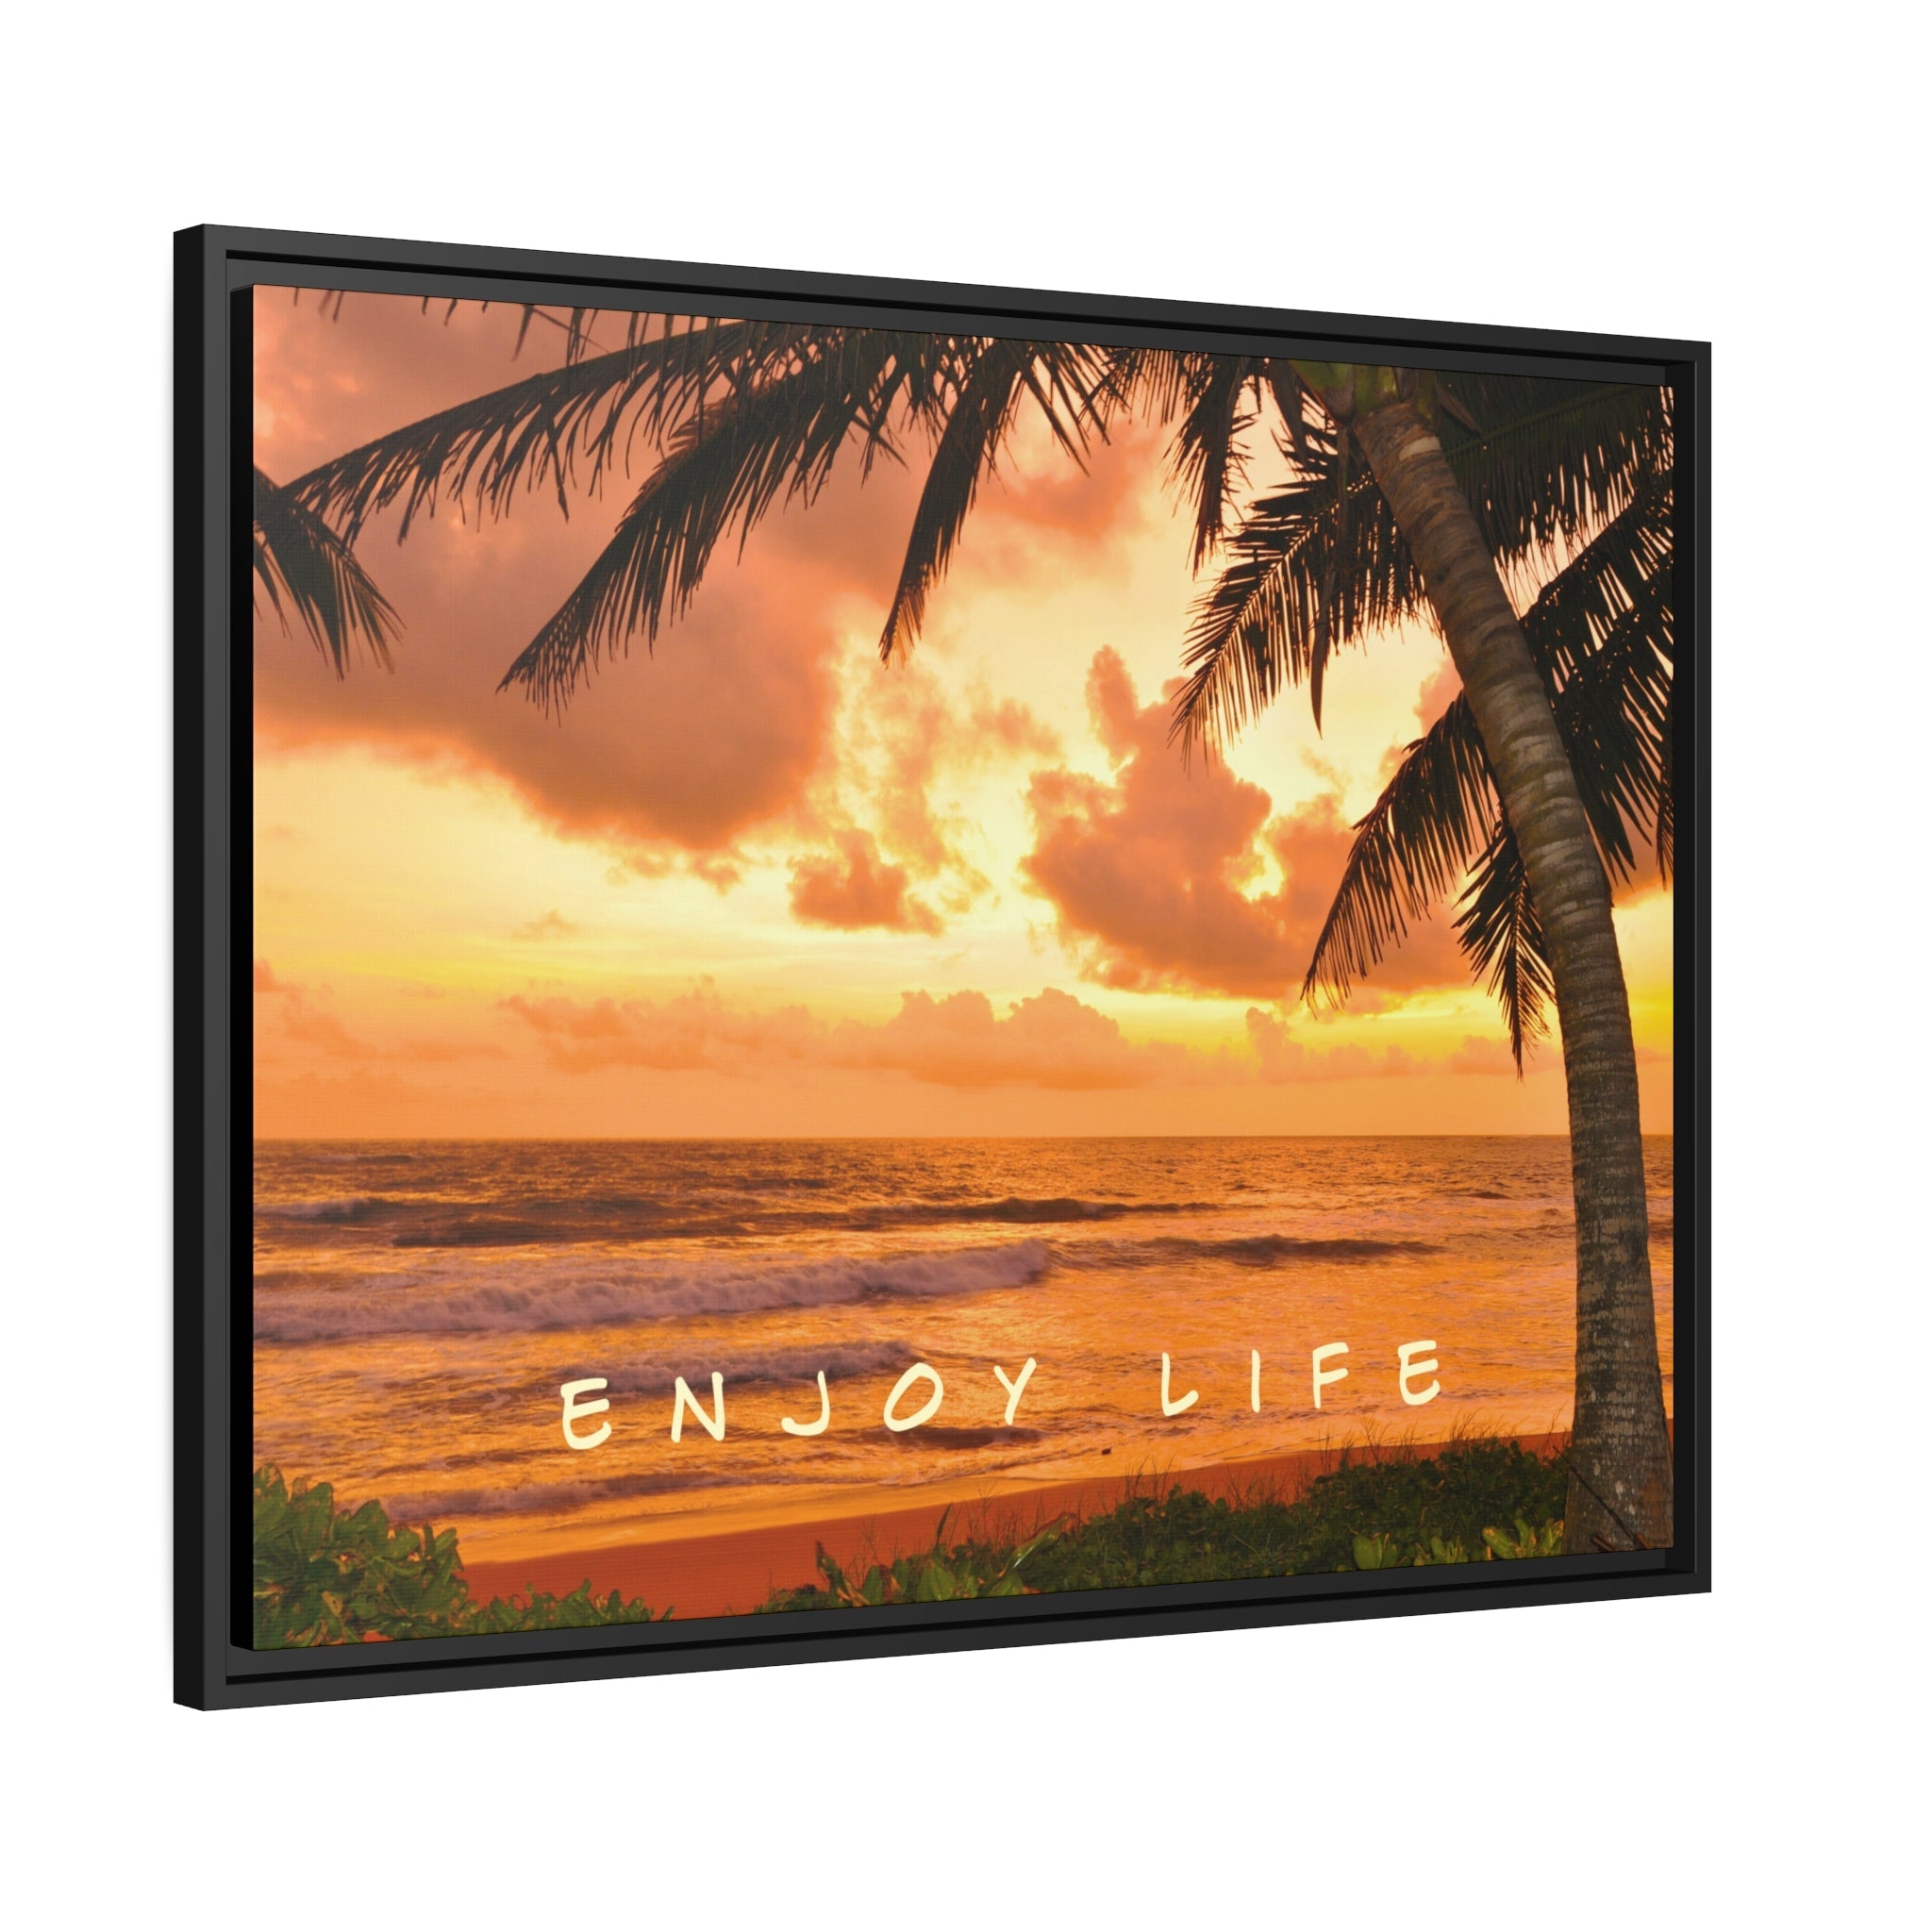 Enjoy Life - Sunset - Wall Art additional image 5